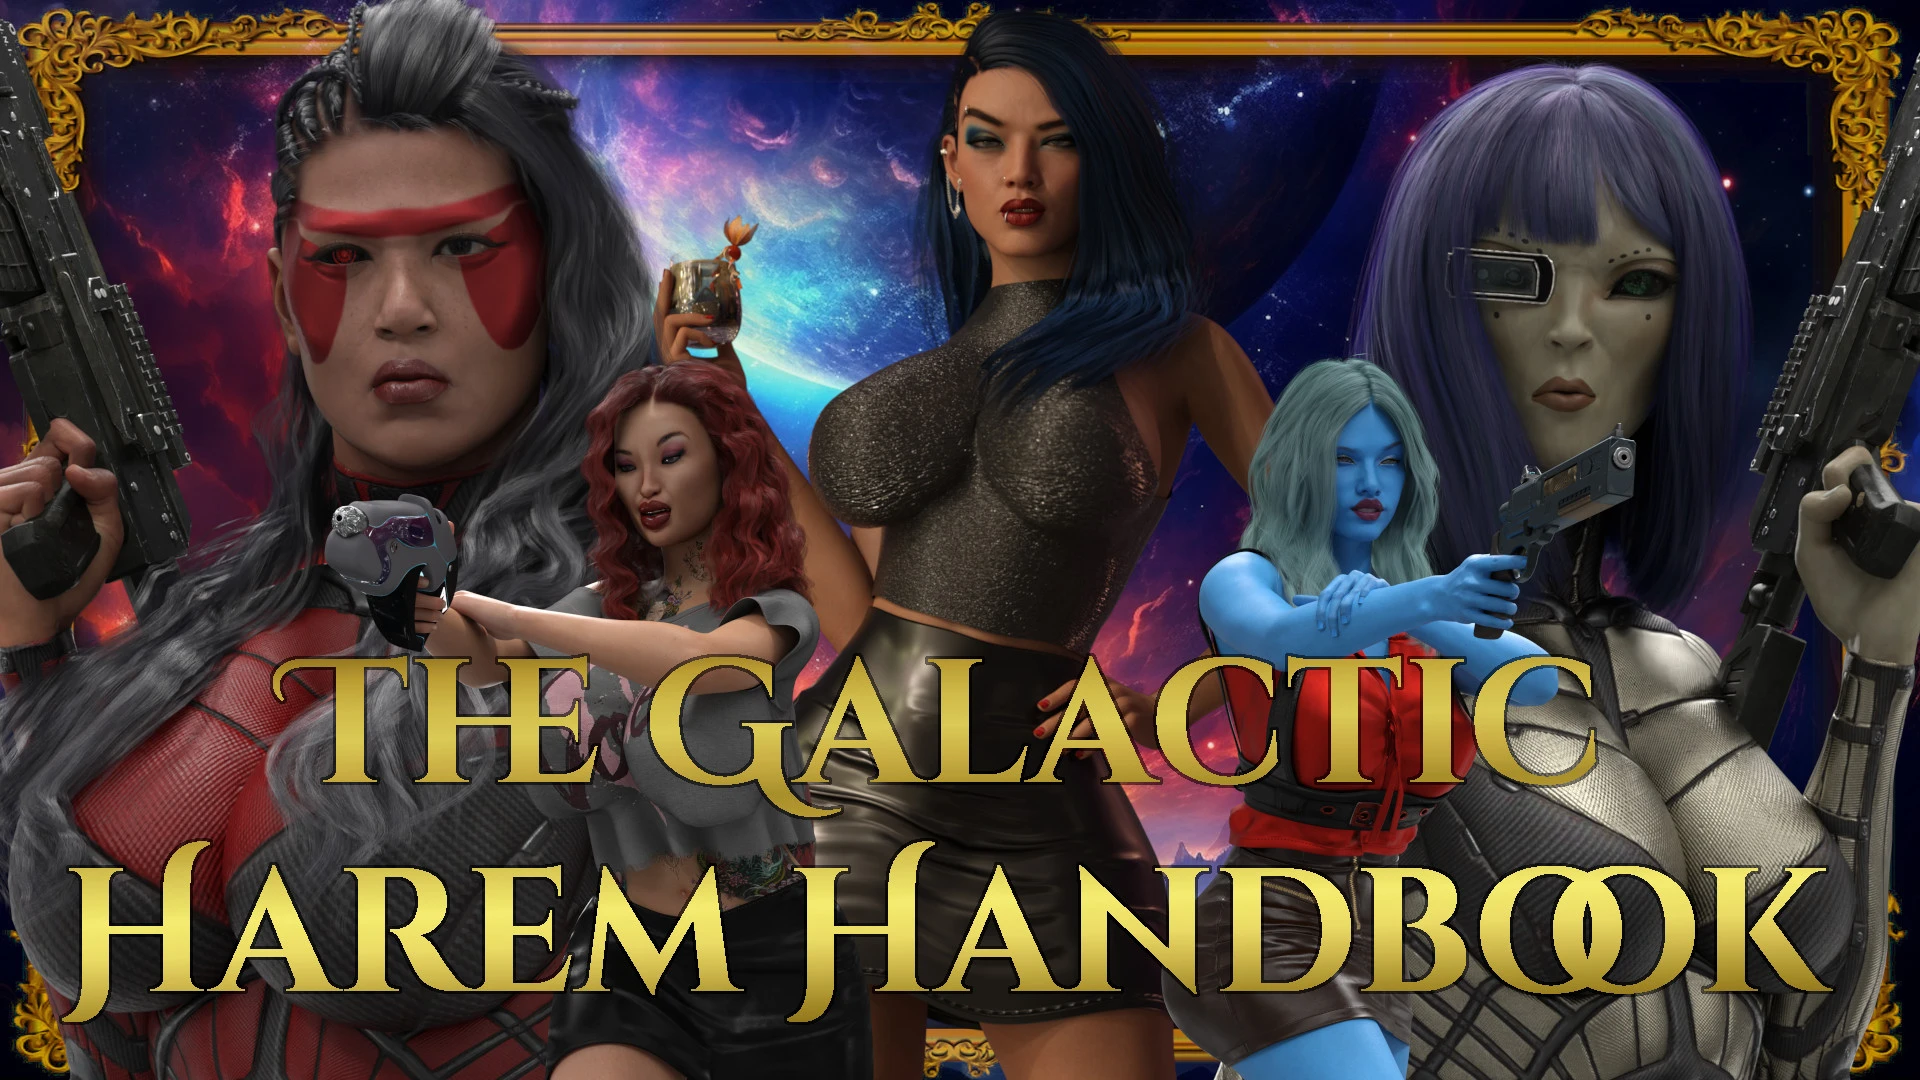 The Galactic Harem Handbook main image